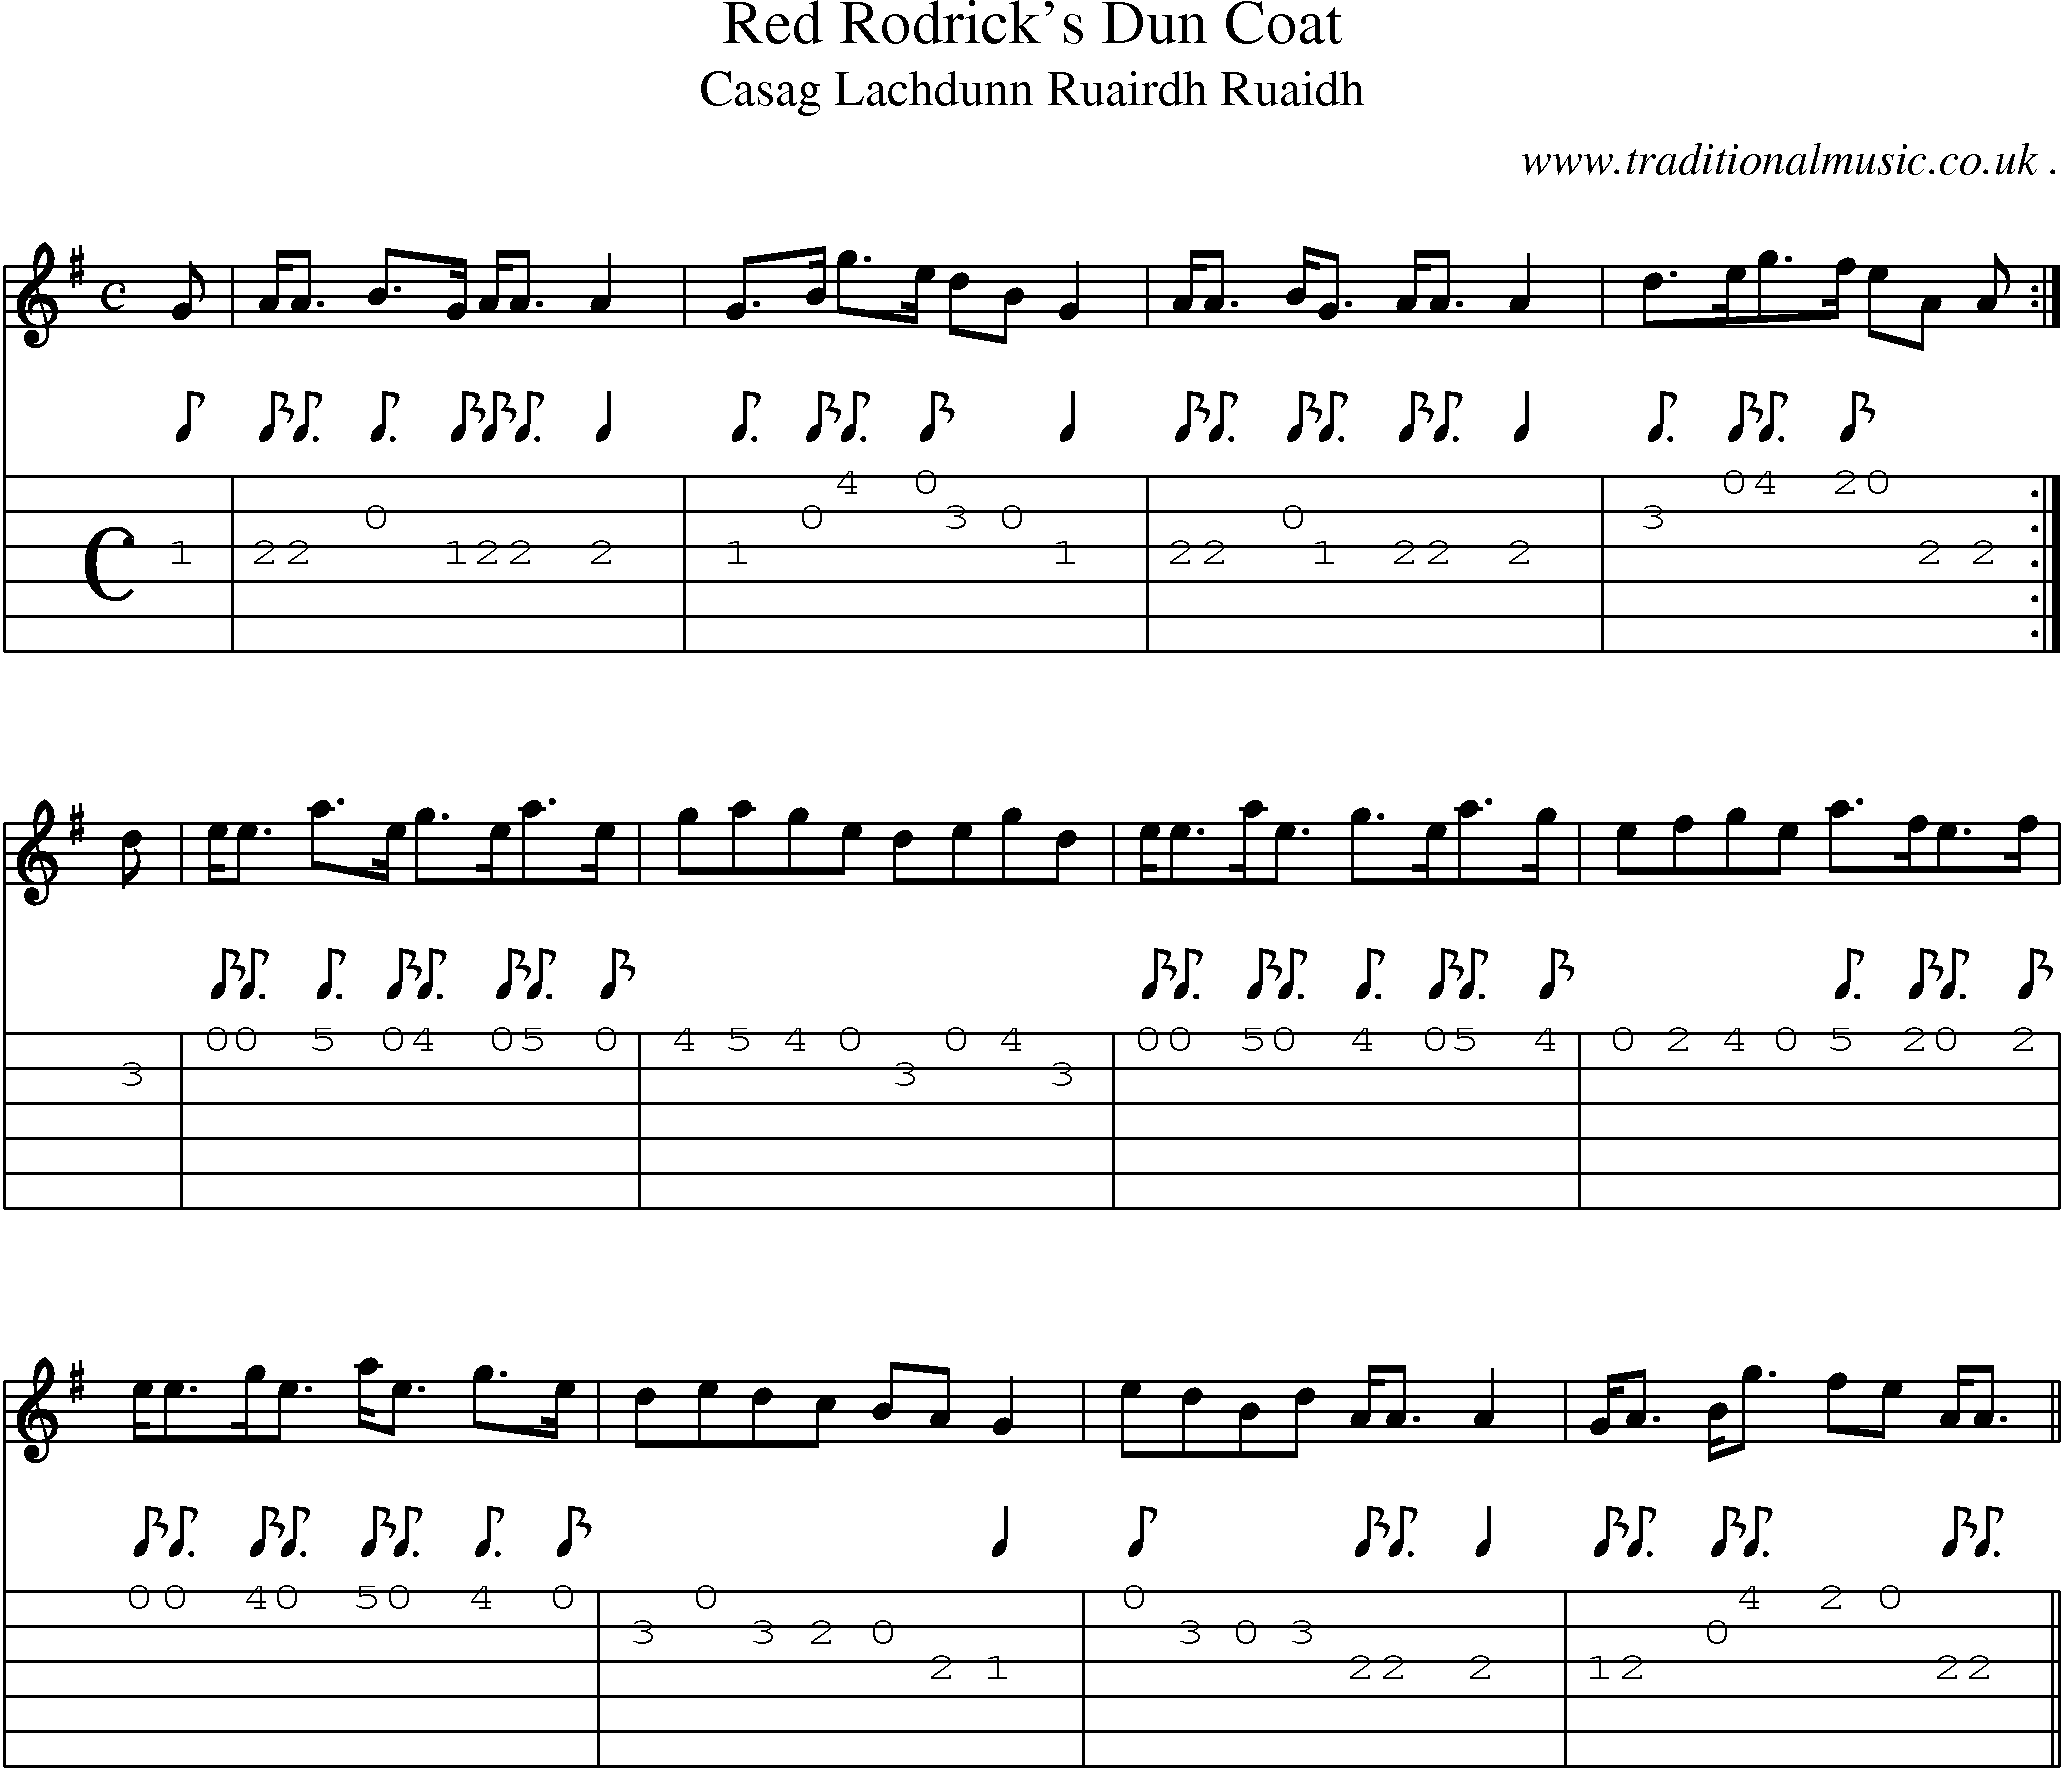 Sheet-music  score, Chords and Guitar Tabs for Red Rodricks Dun Coat